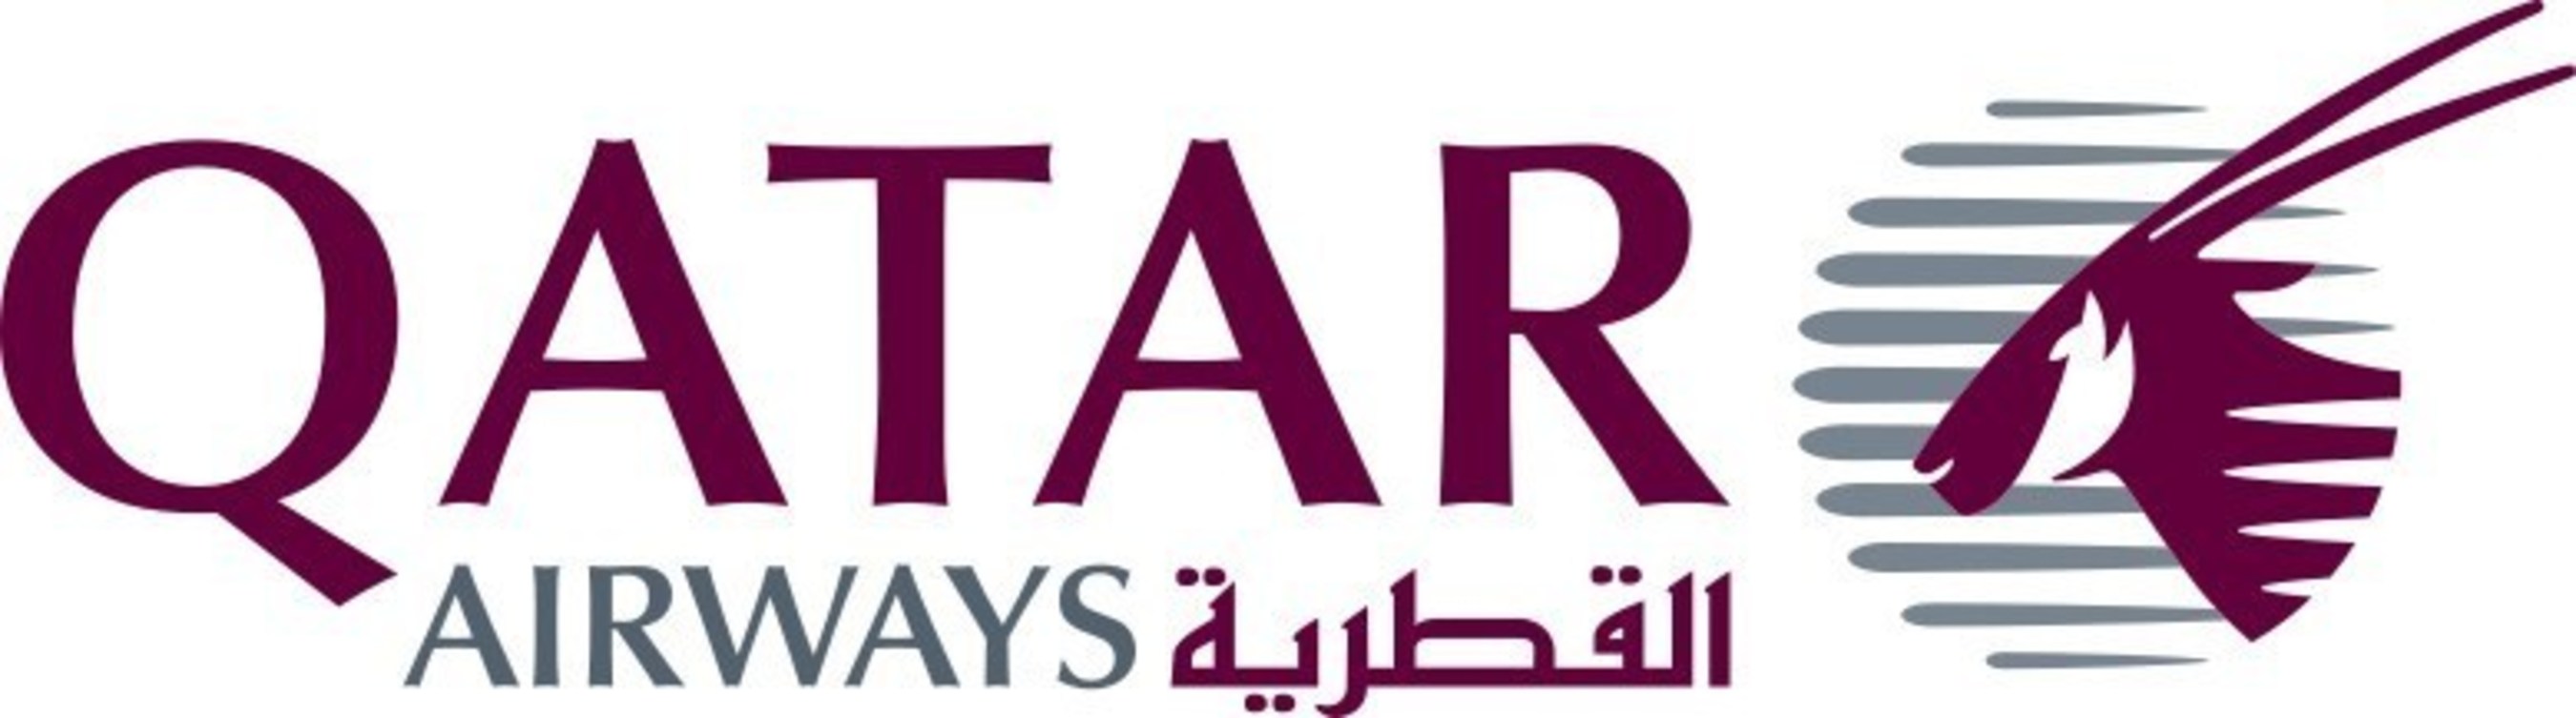 Qatar Airways Announces #GivingThanksSelfie Contest For U.S. Travelers